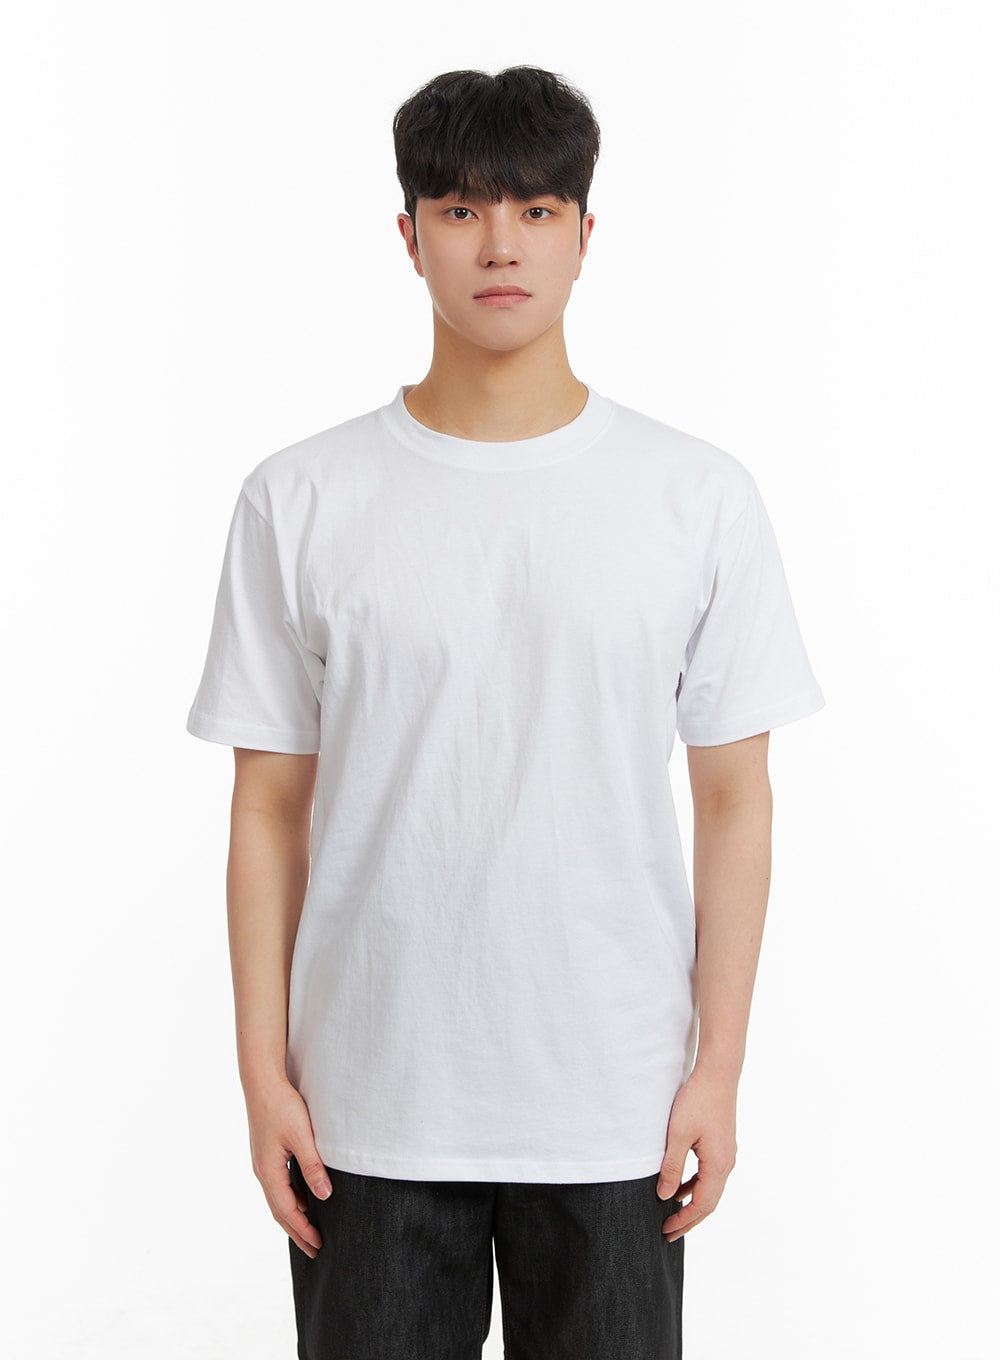 mens-basic-short-sleeve-t-shirt-ia402-white / White